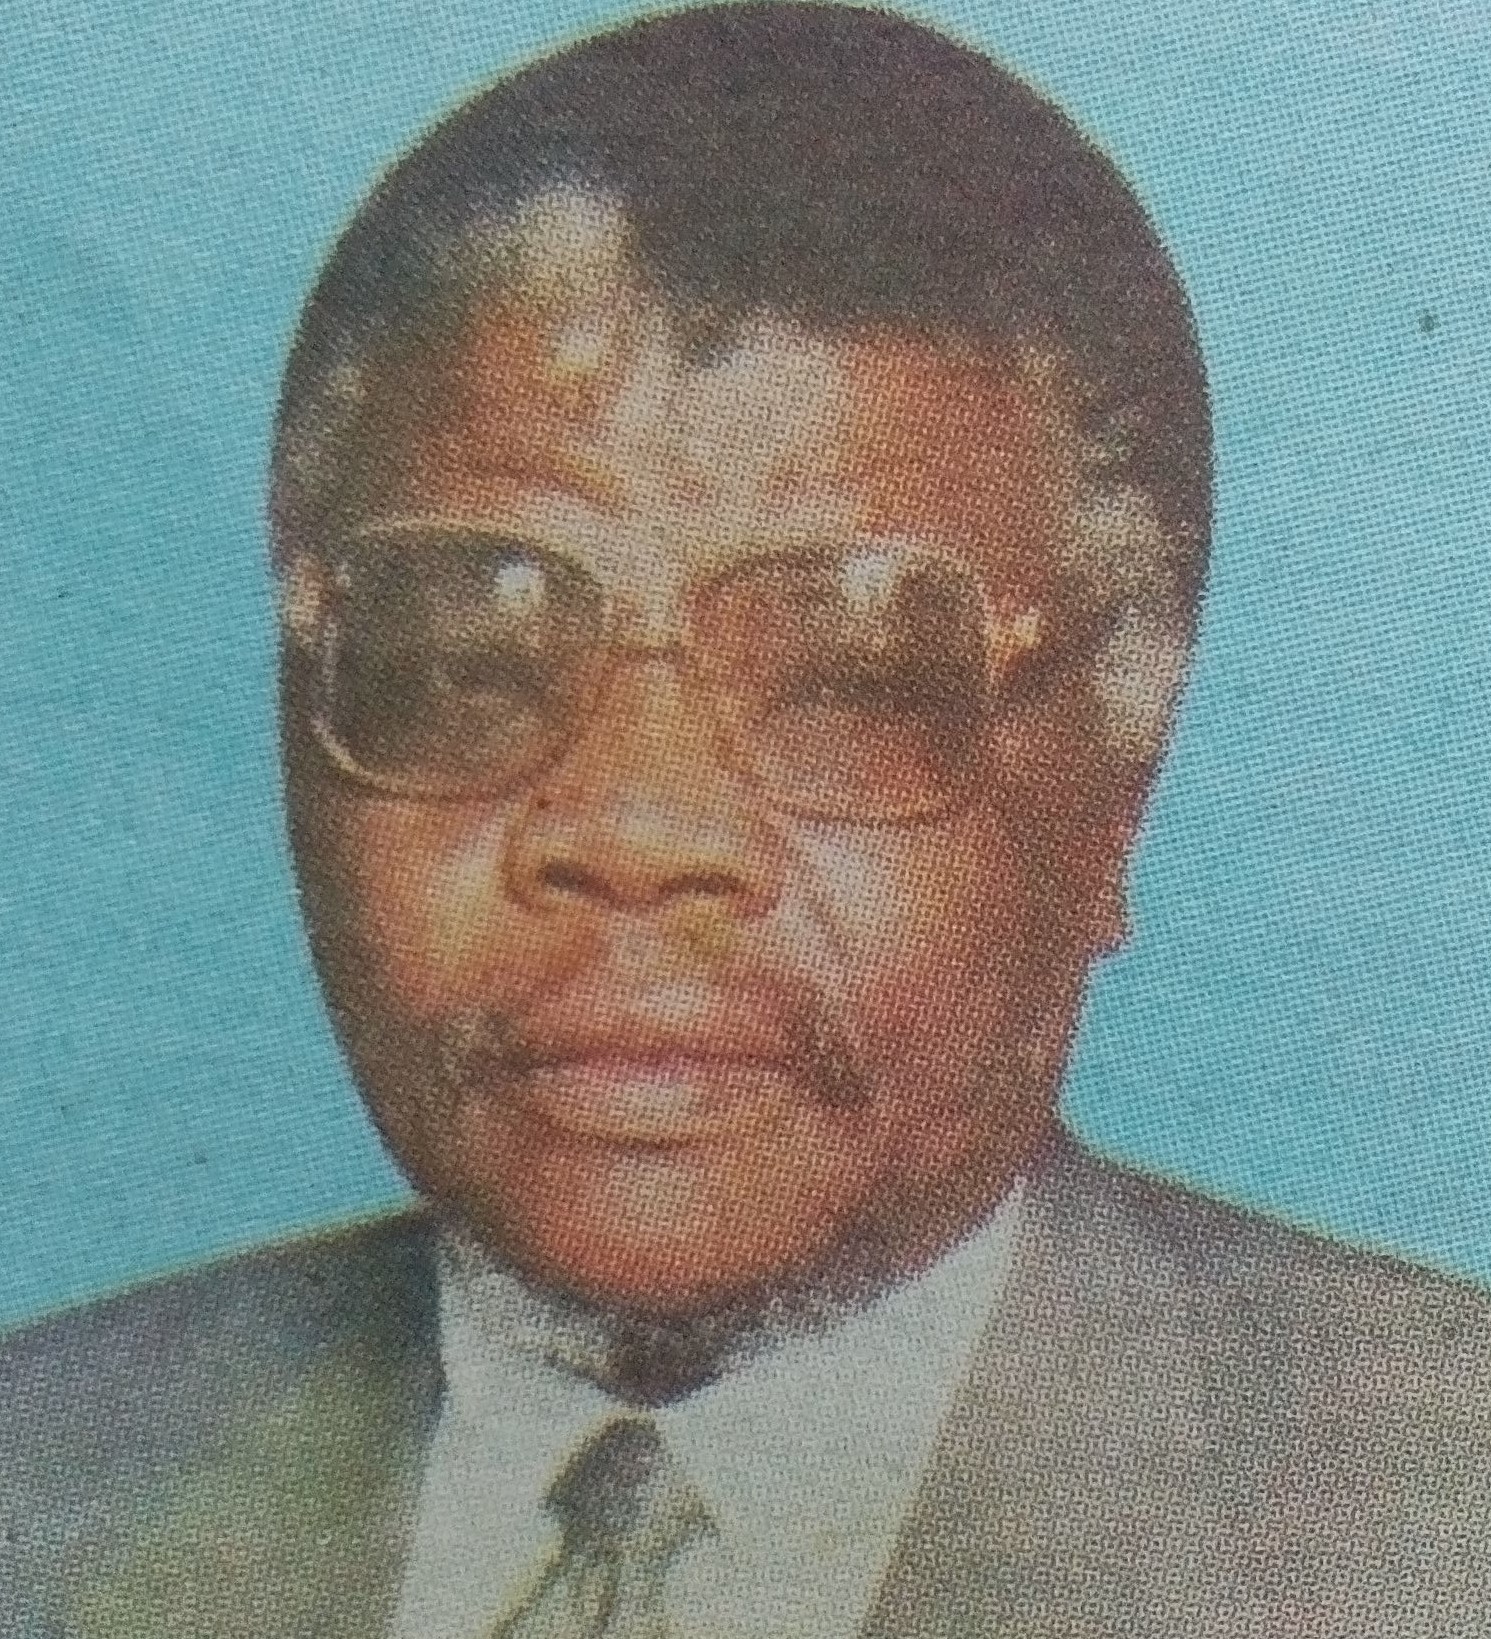 Obituary Image of Awori Wa Kataka